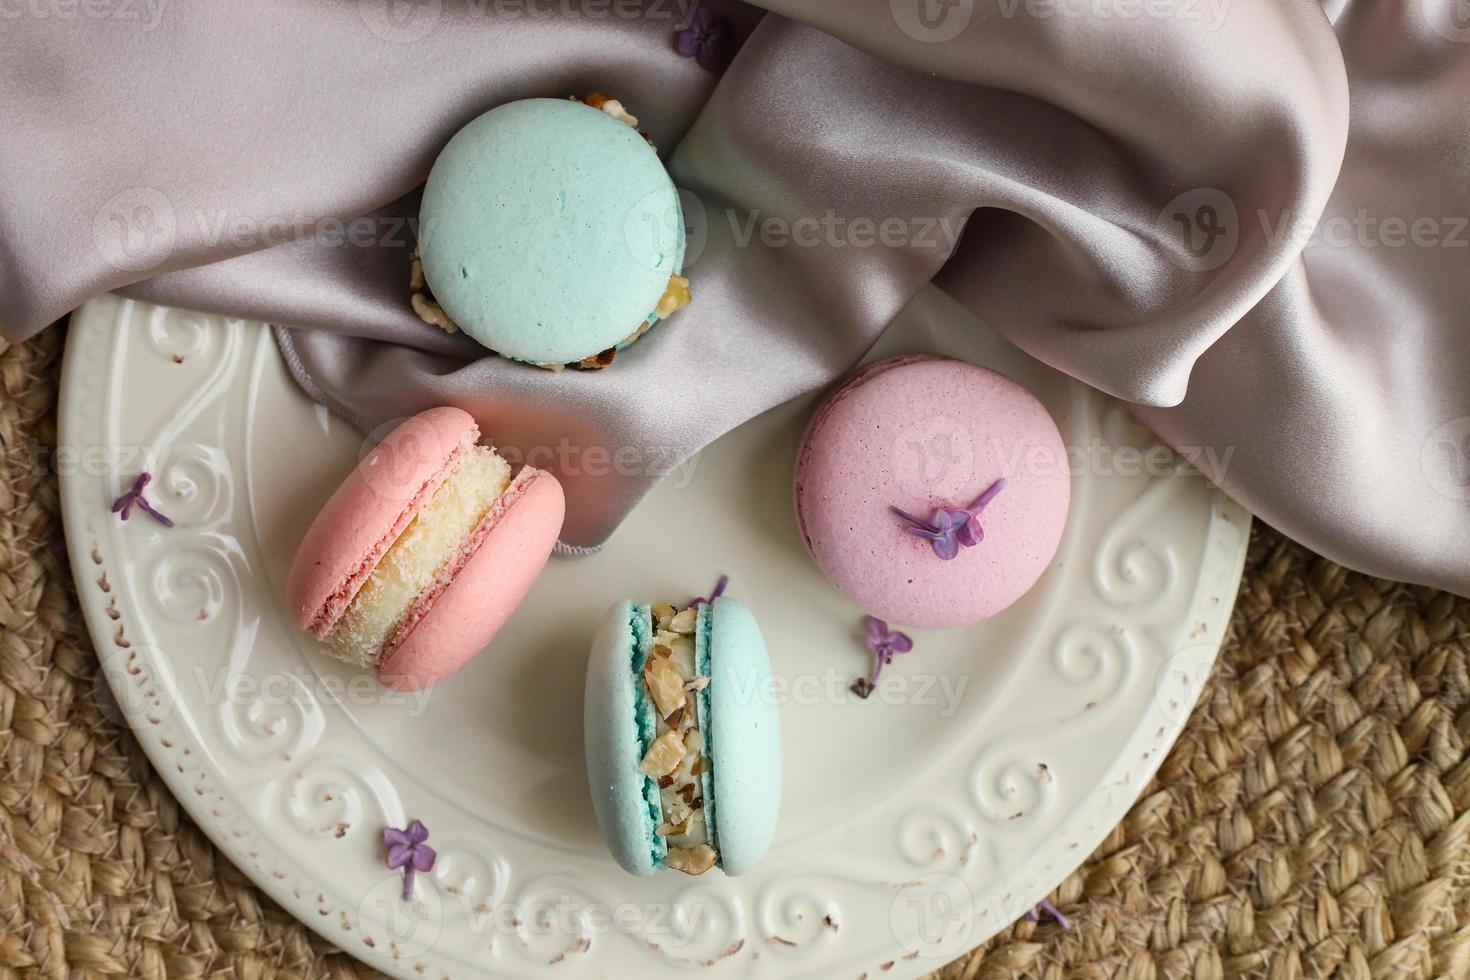 coloridos macarons de postre francés o macarons en un plato con flor lila sobre un fondo de tela de paja y atlas. foto